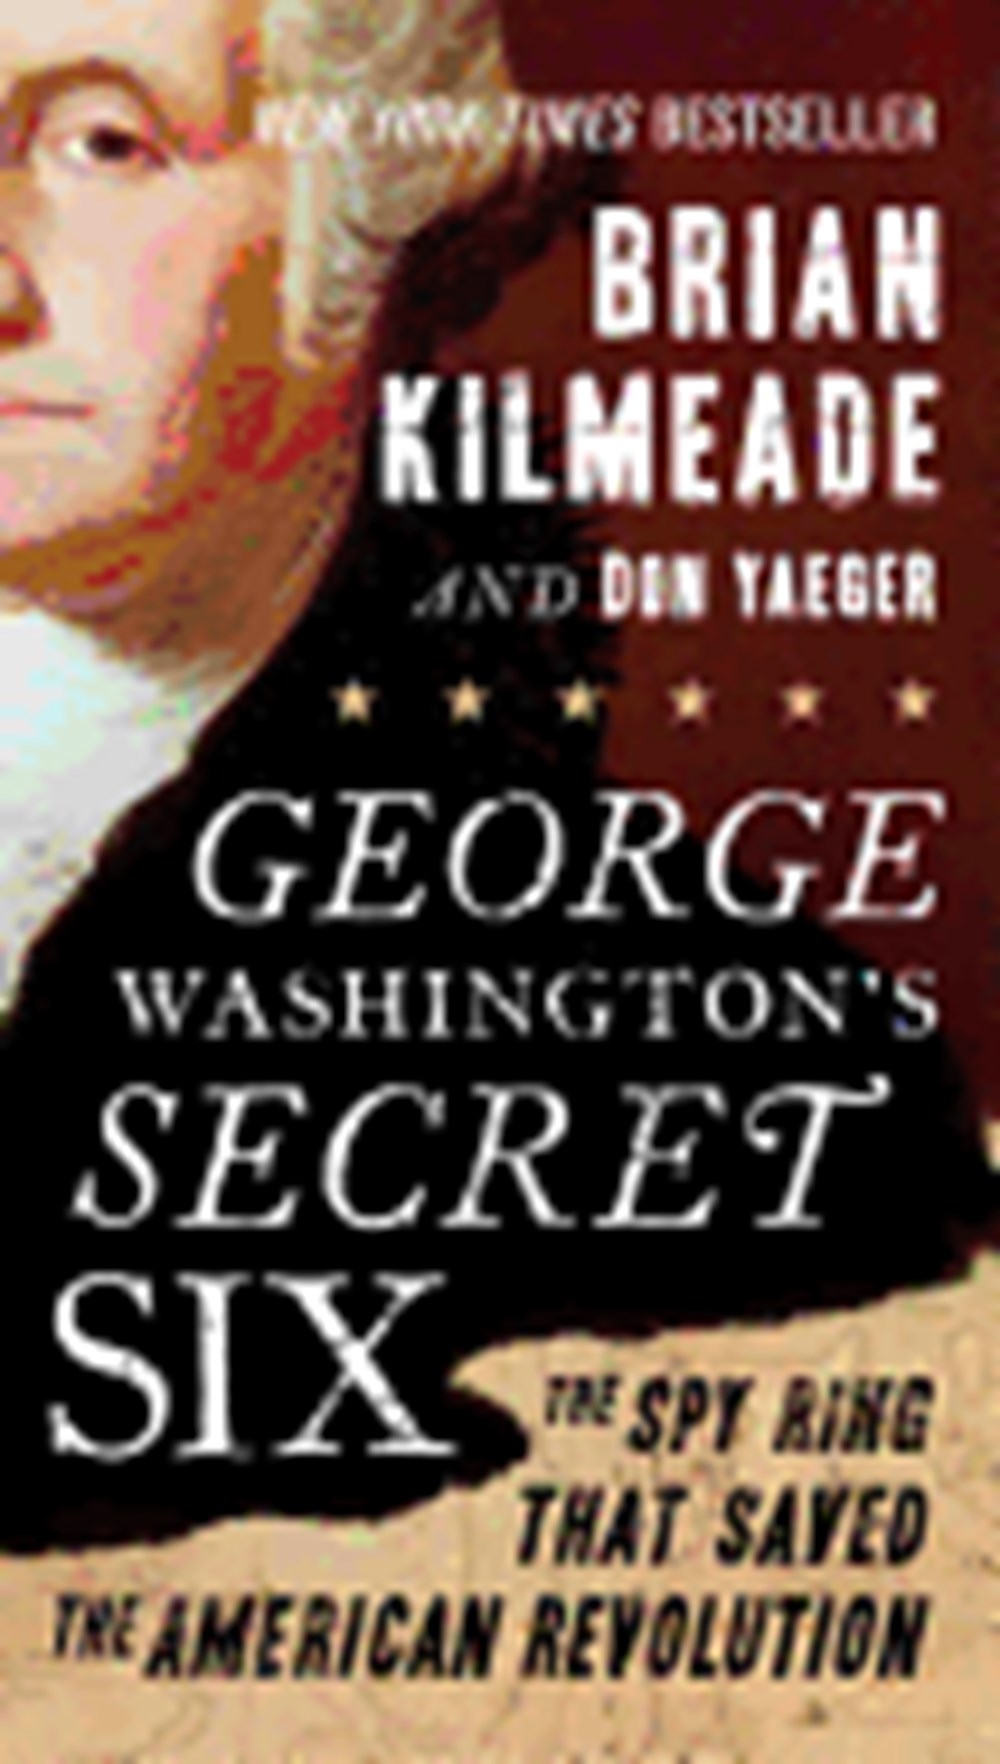 George Washington's Secret Six The Spy Ring That Saved the American Revolution